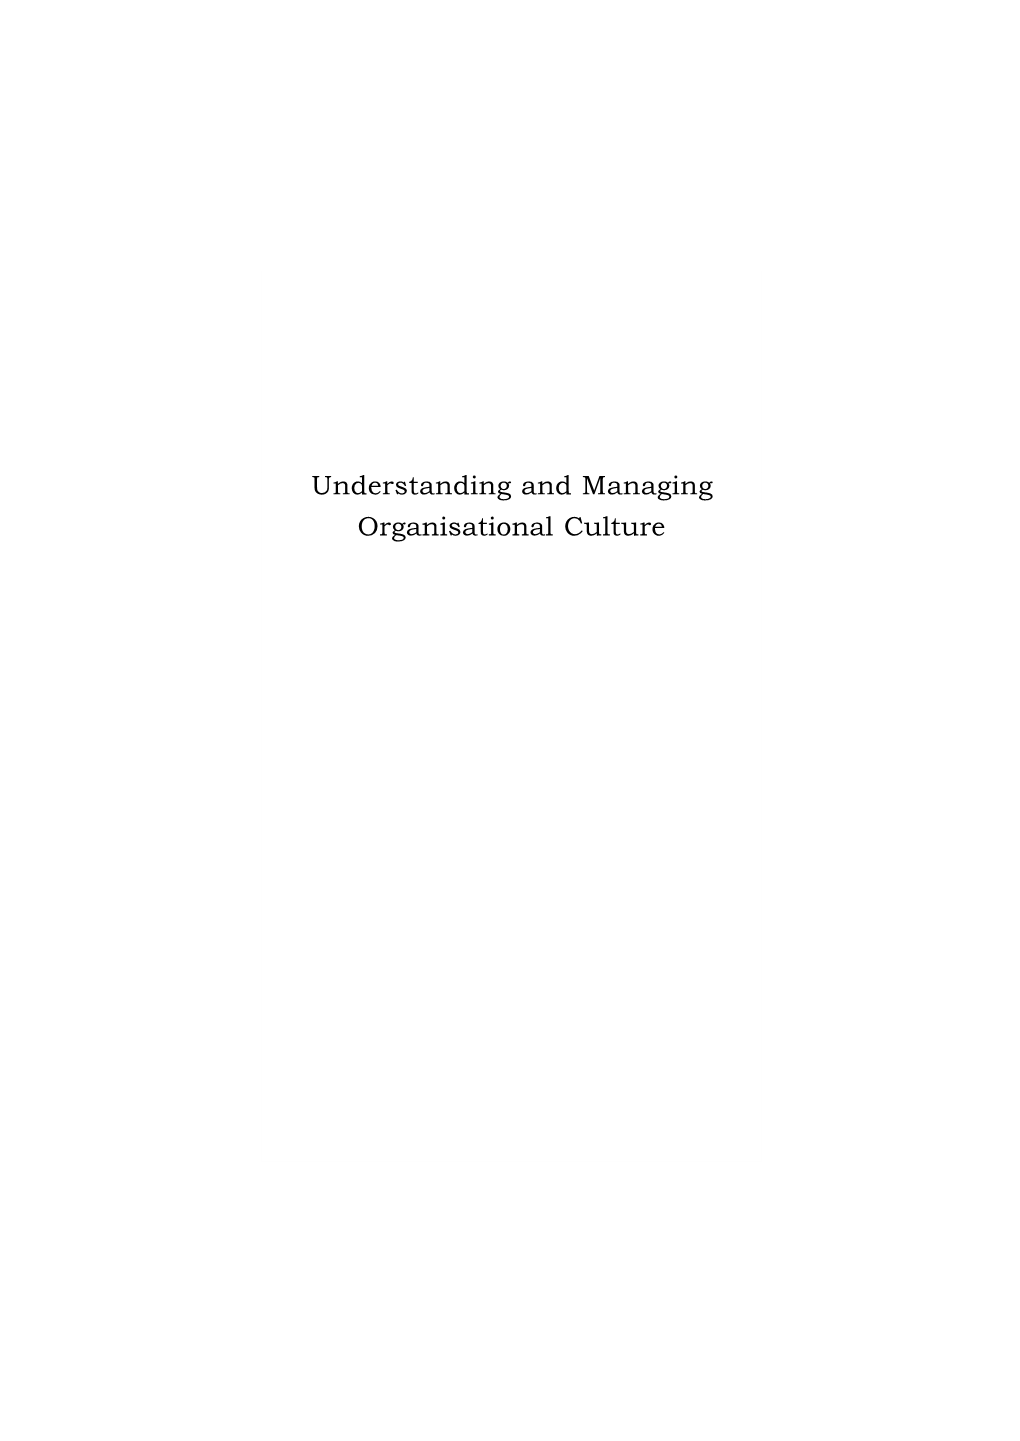 Understanding and Managing Organisational Culture